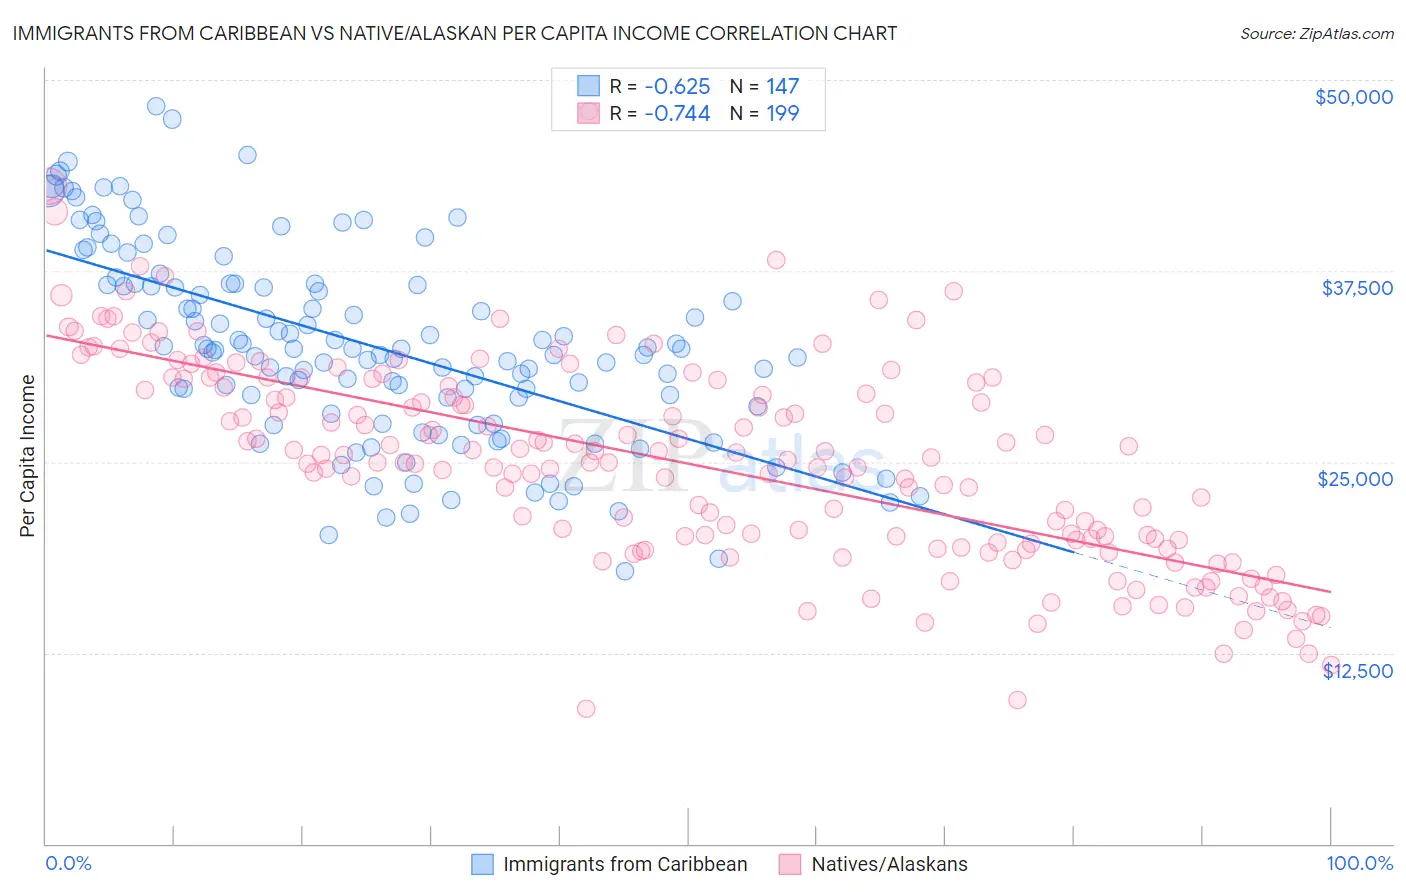 Immigrants from Caribbean vs Native/Alaskan Per Capita Income